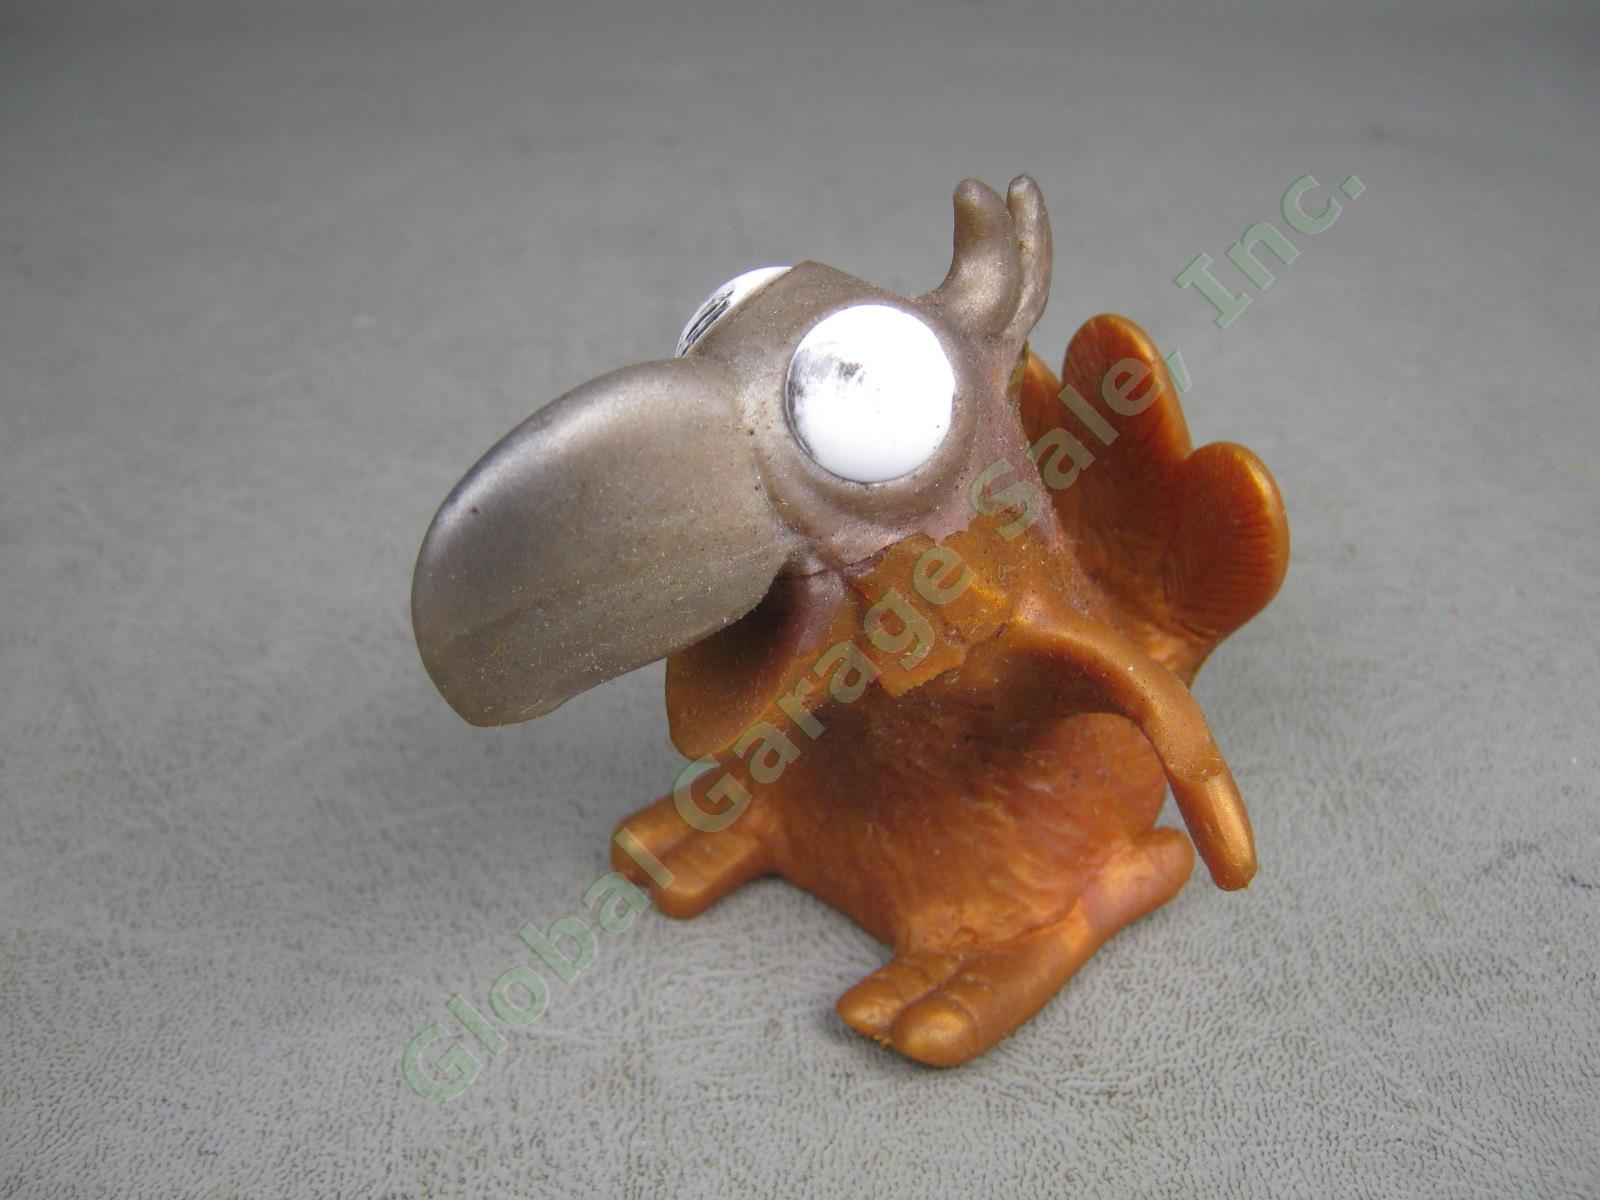 3" Vtg 1970 ULTRA-RARE Russ Wallace Berrie Oily Jiggler Rubber Toy Parrot Figure 1